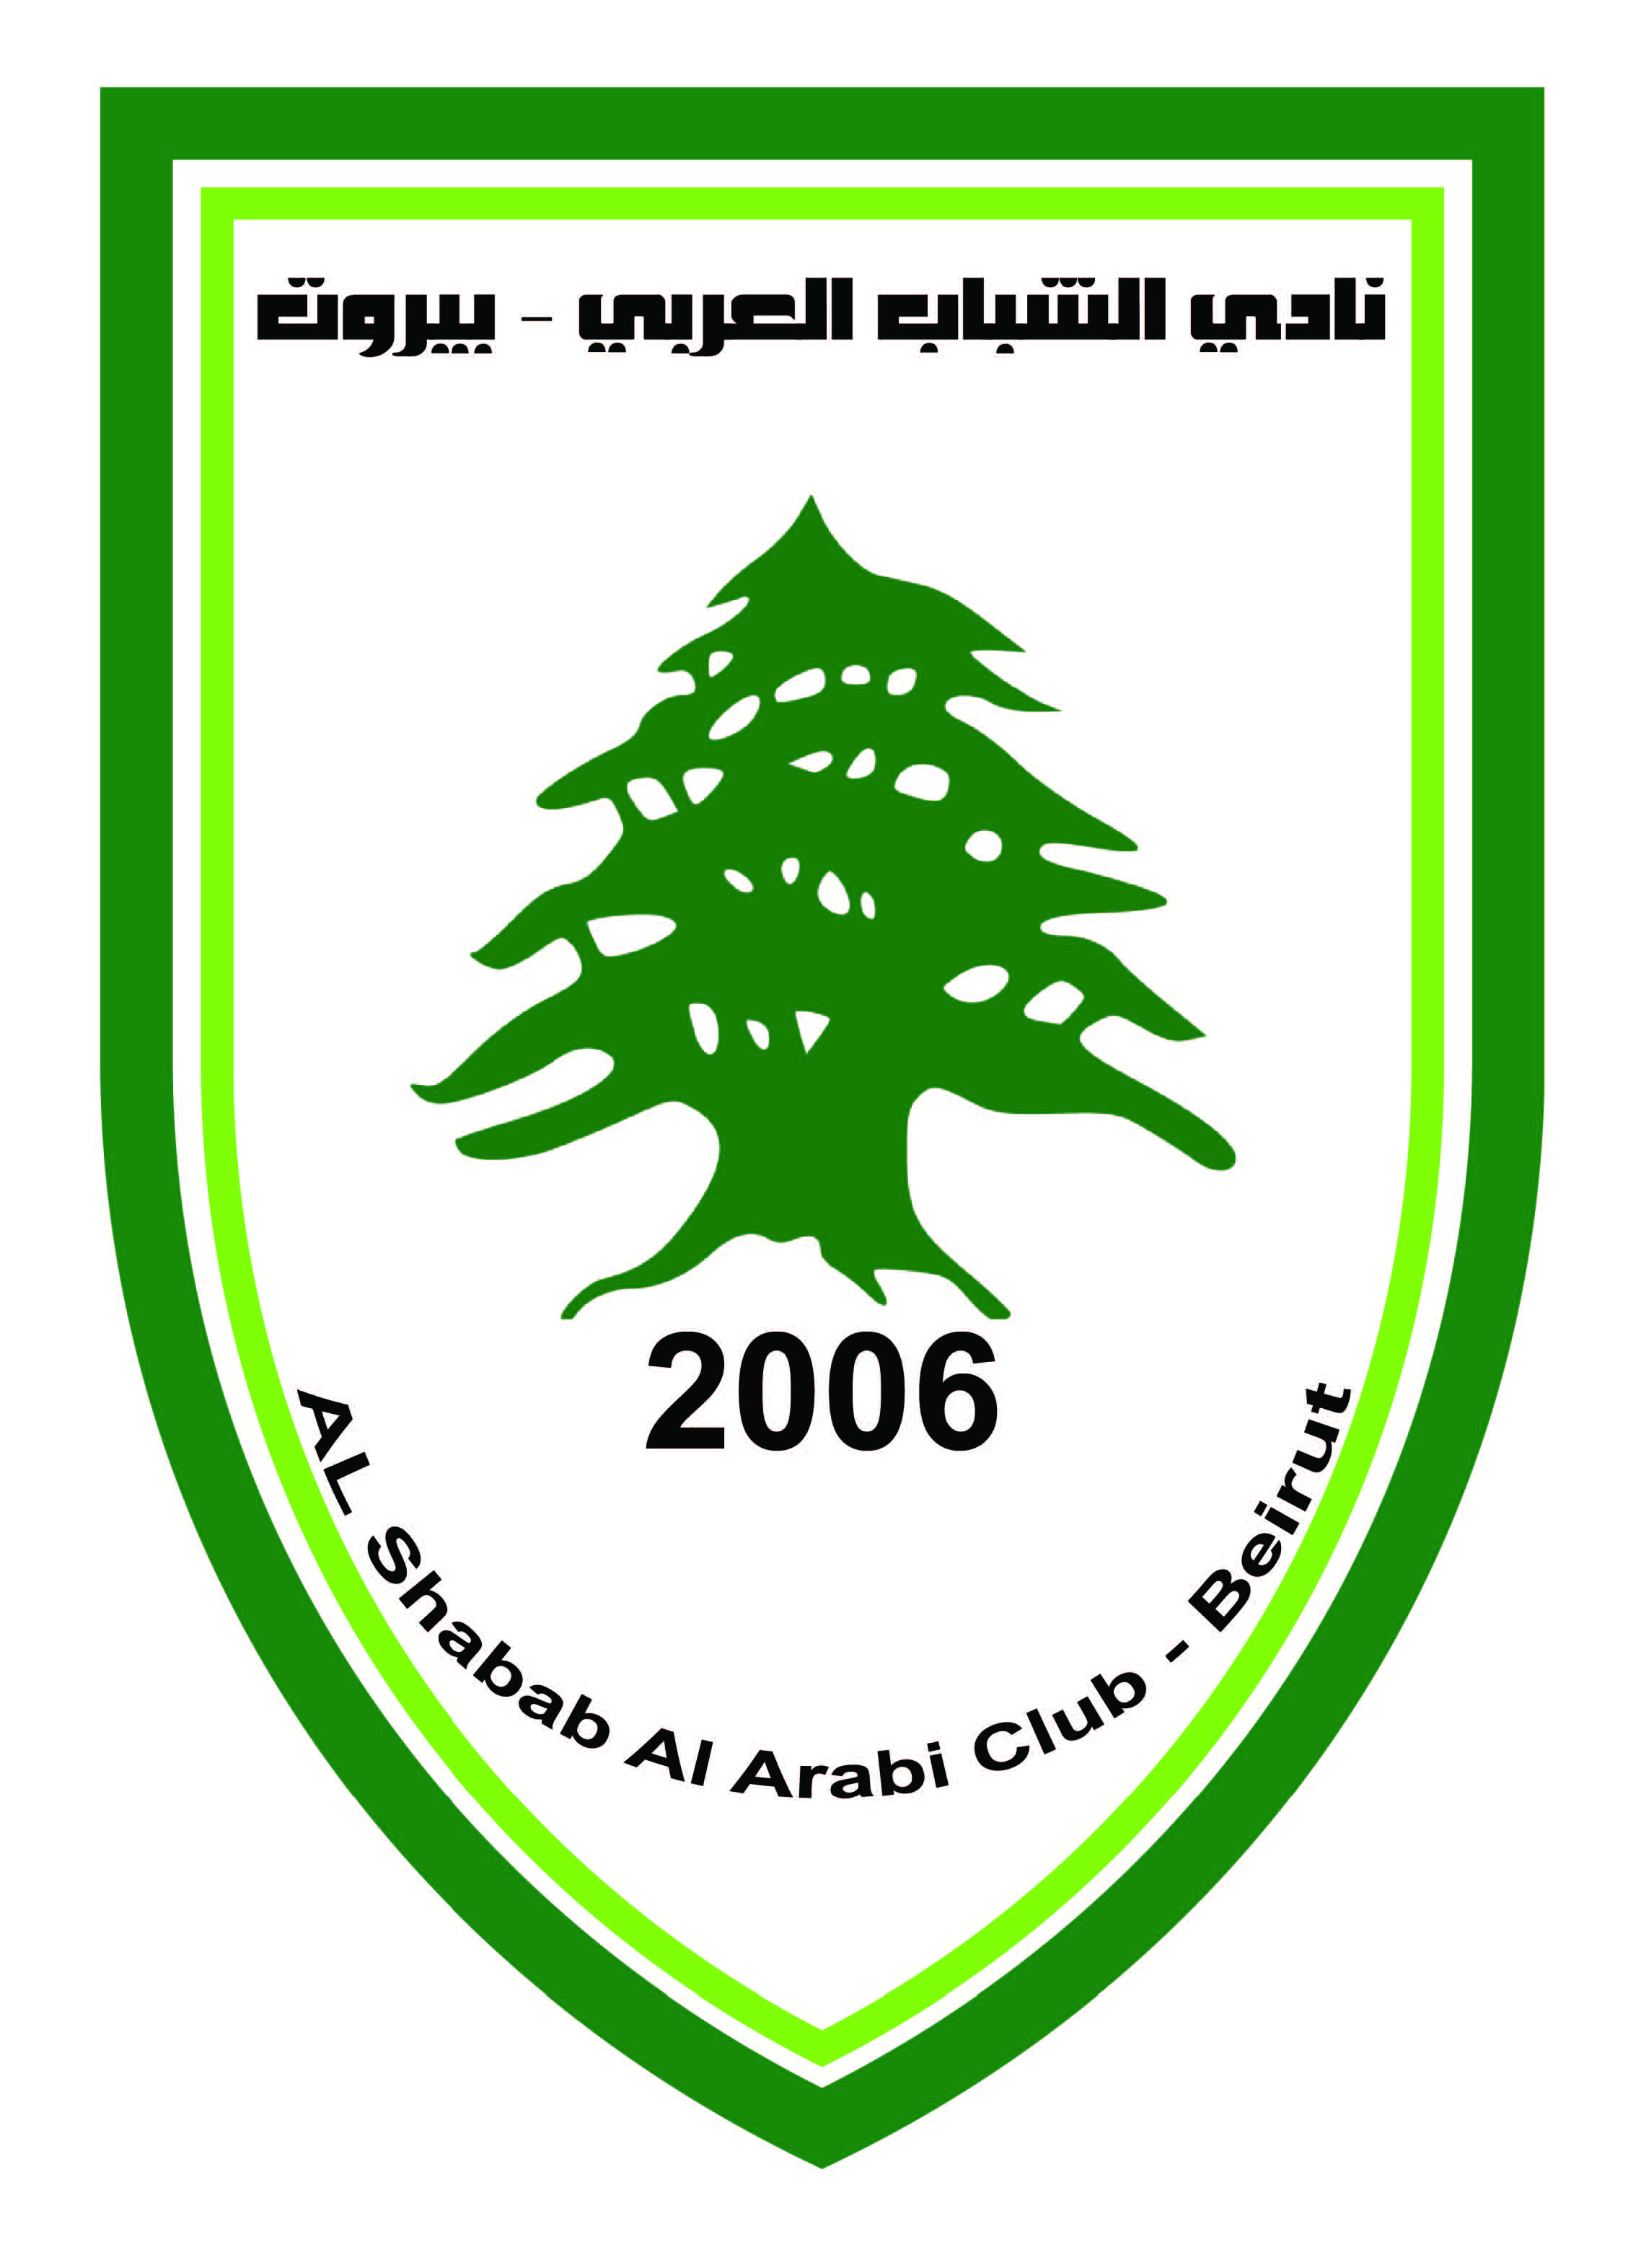 Shabab Al-Arabi team logo